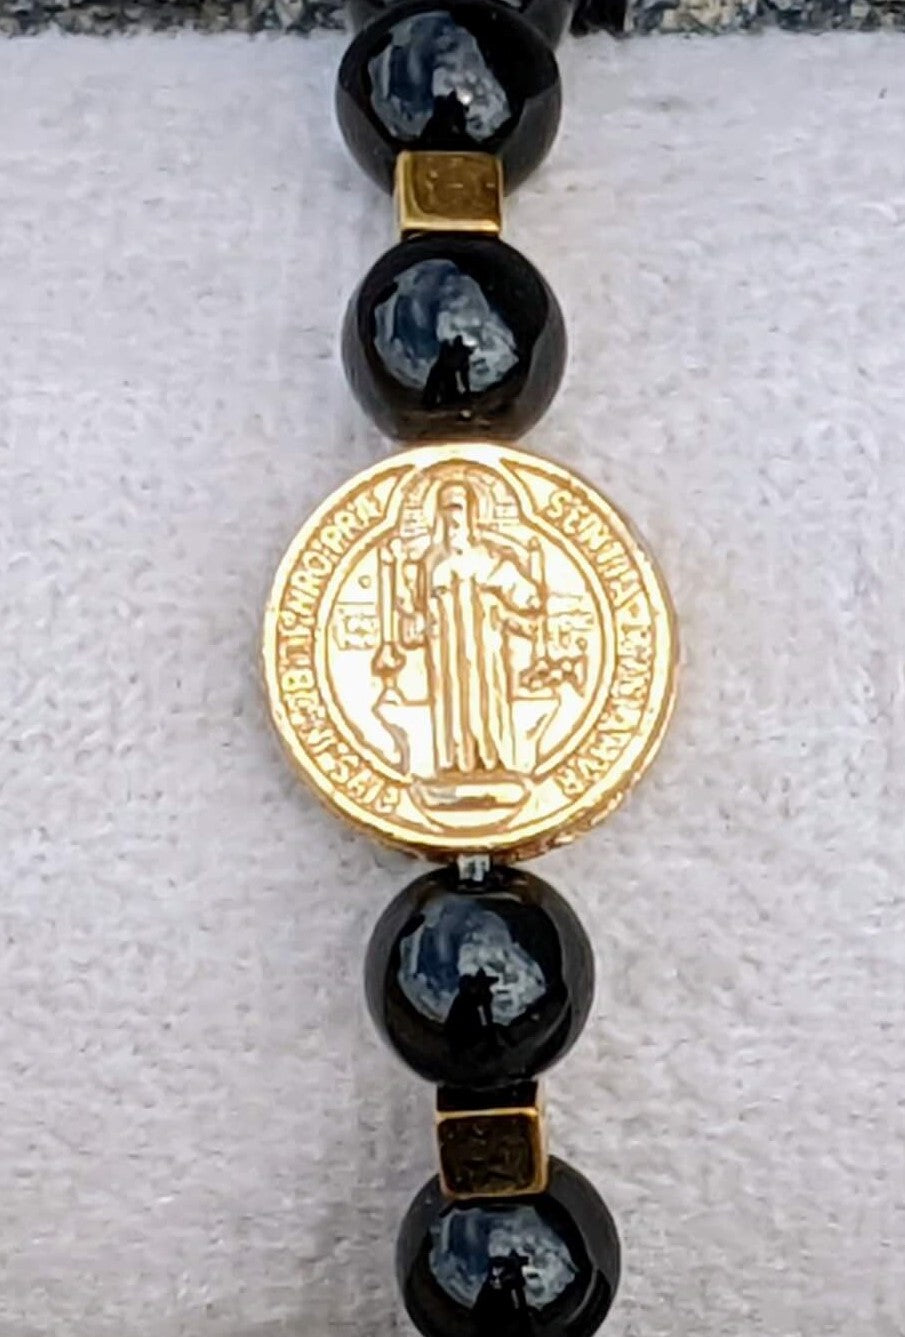 Black Onyx Polished (8mm Bead Size) with Large Saint Benedict